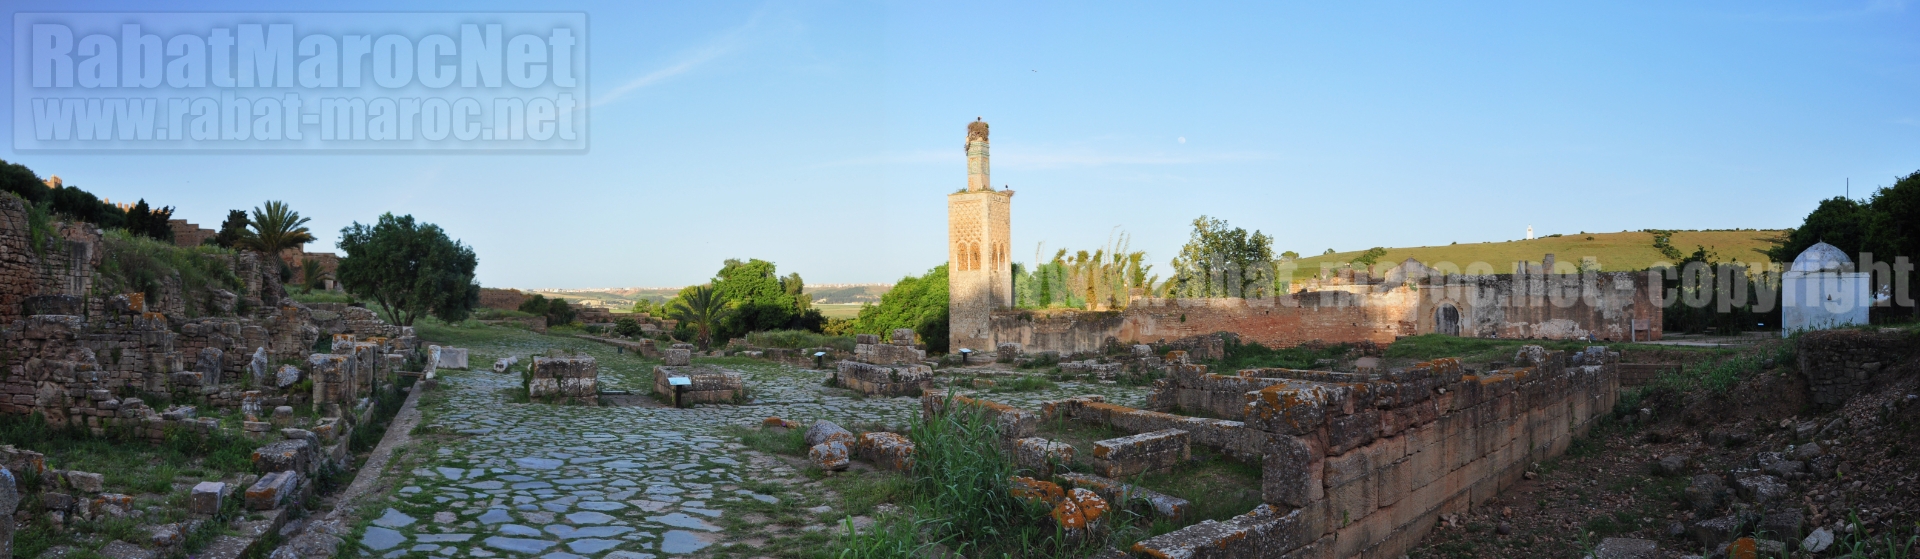 chellah ruines antiques arc triomphe medersa mosquee